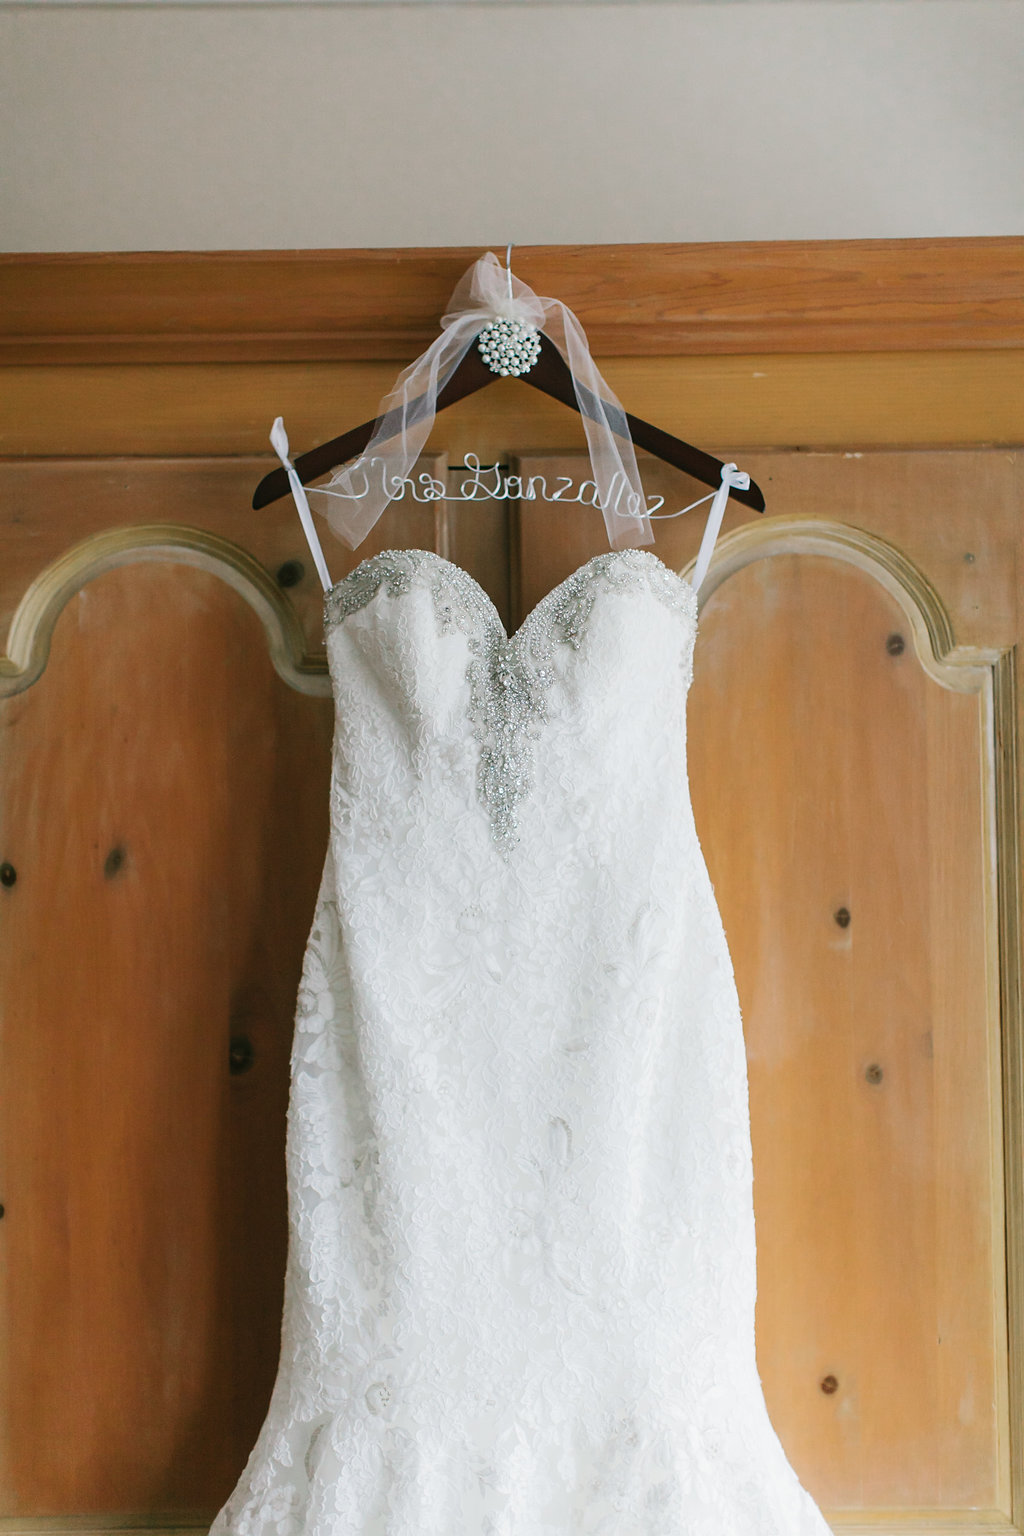 Strapless Silver Beaded Mermaid Wedding Dress on Customized Hanger